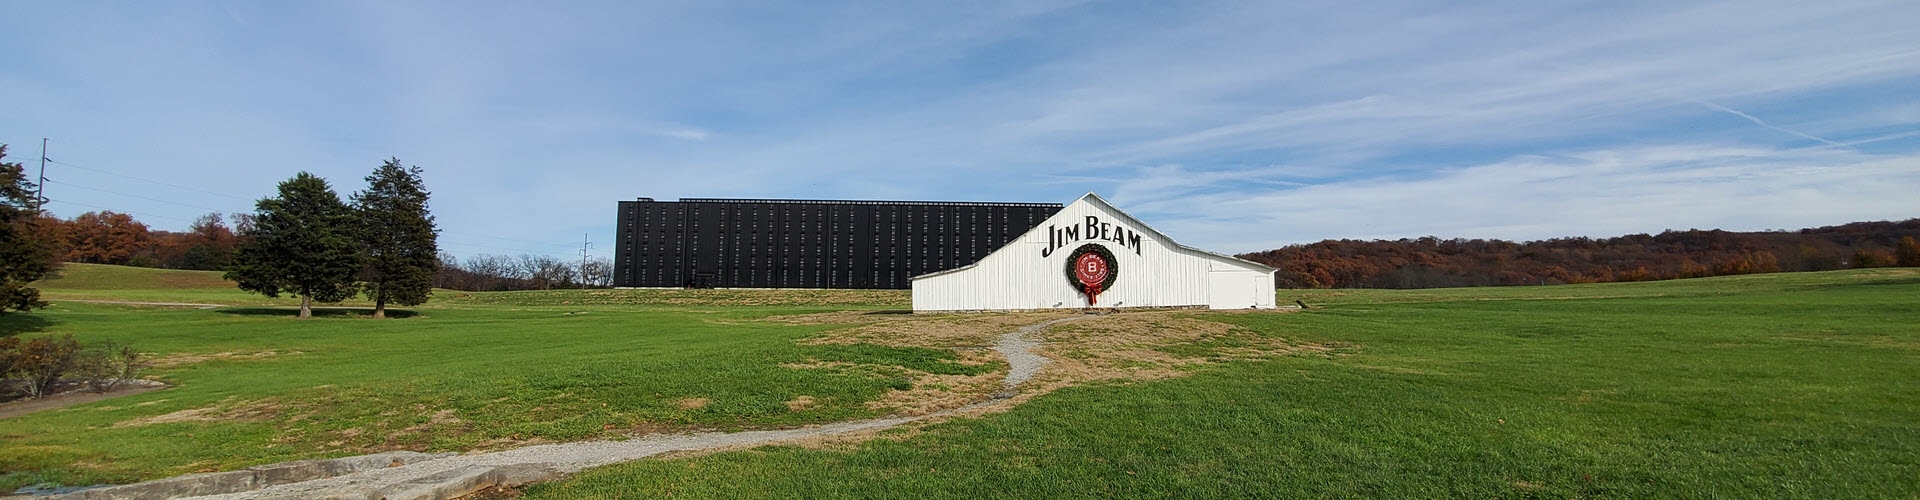 James B. Beam Distilling Co. - Jim Beam Barn and 58,000 Barrel Warehouse